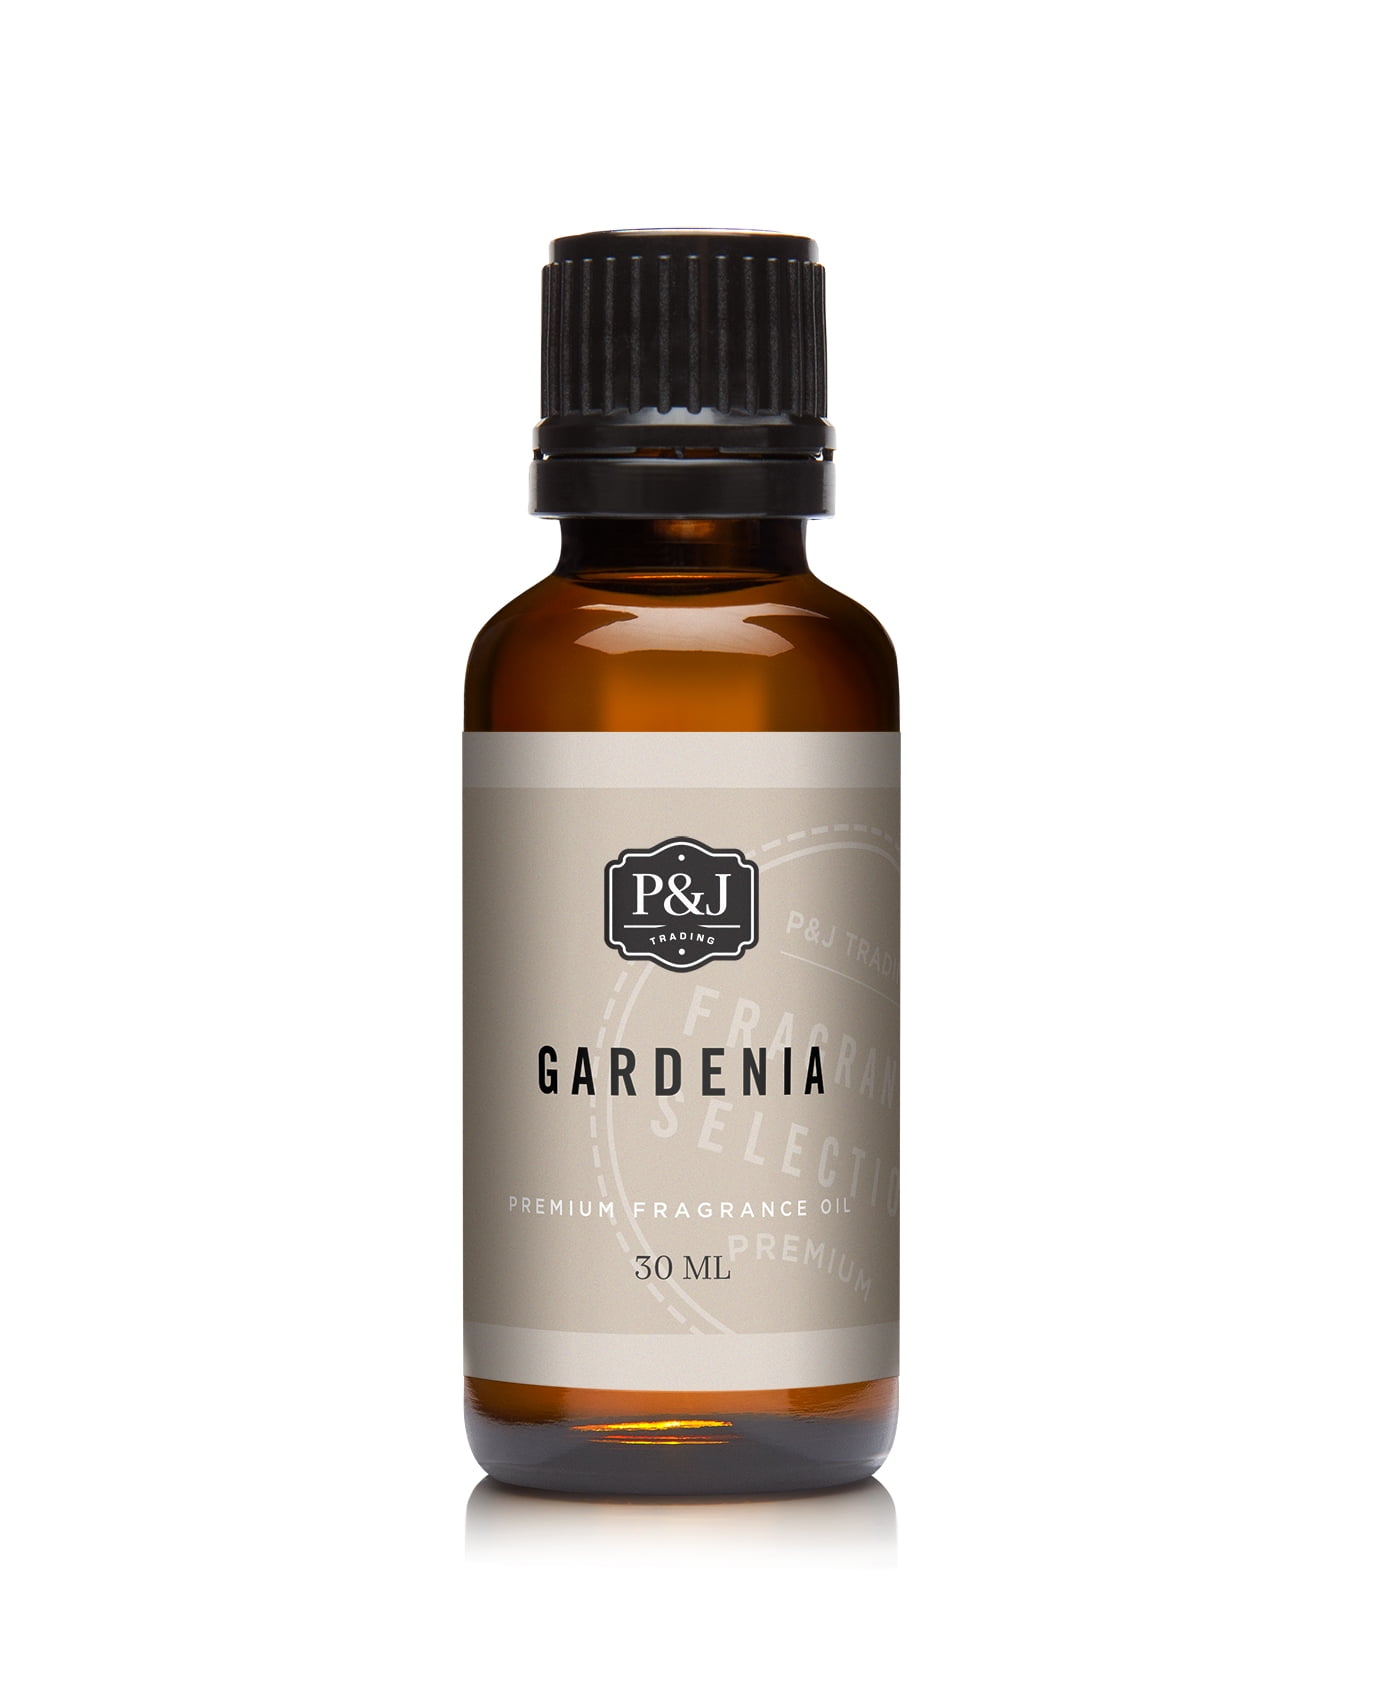 Gardenia Oil Wholesale Suppliers, Buy Pure Gardenia Essential Oil